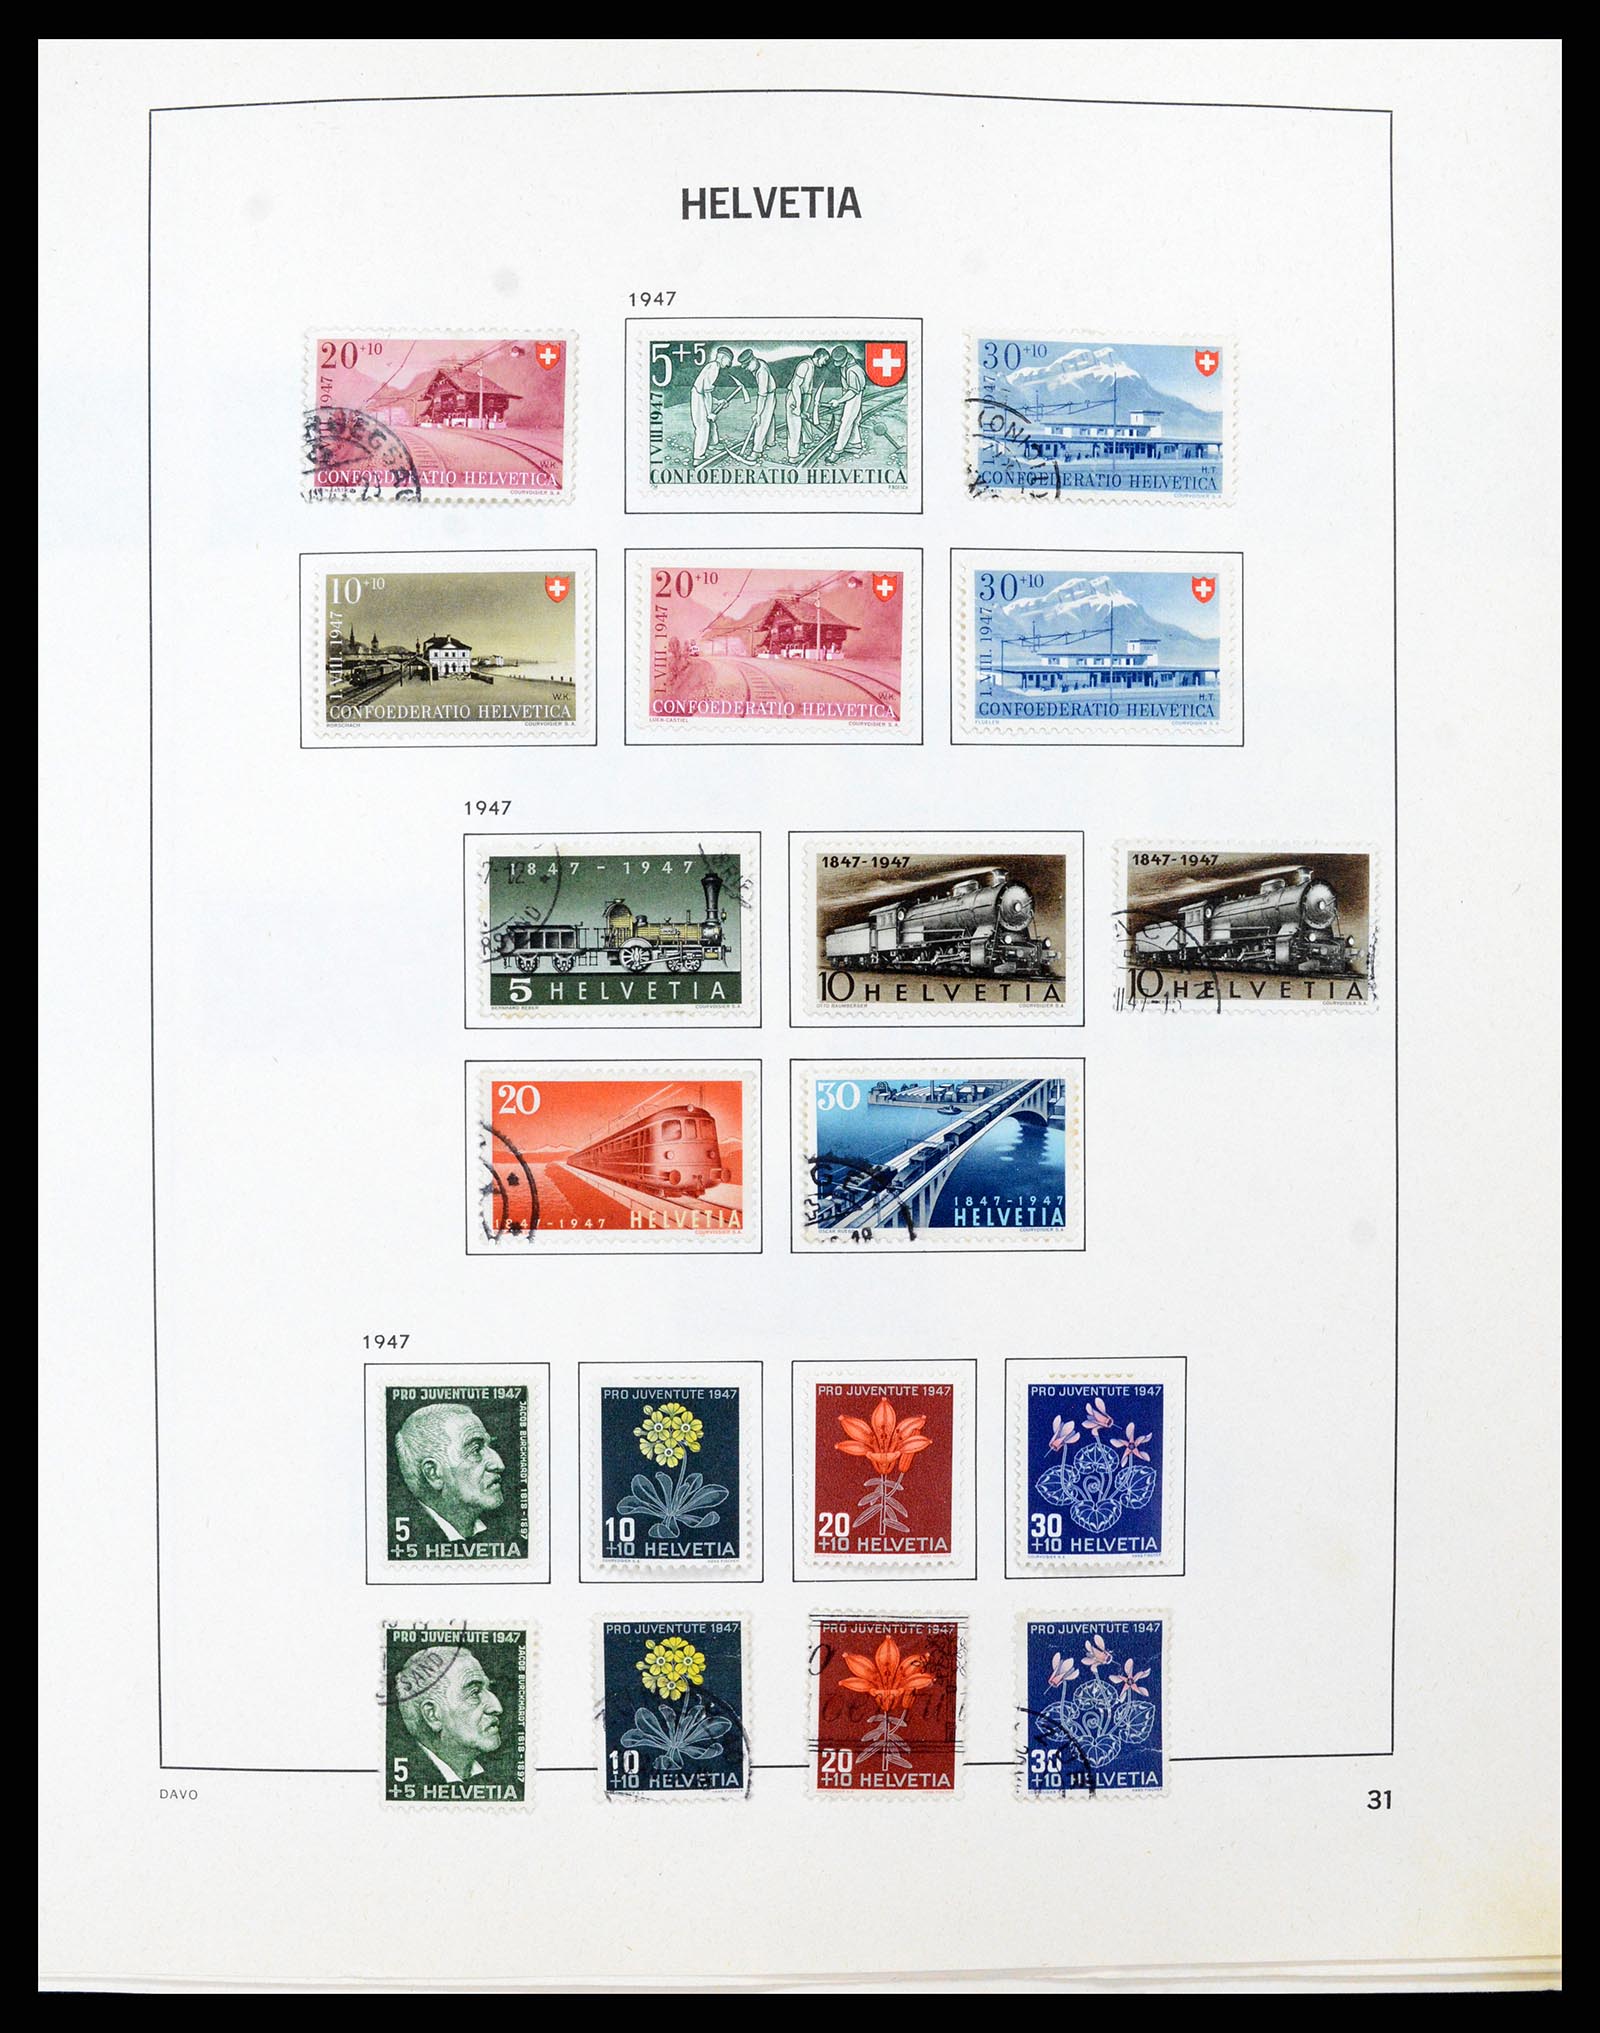 37496 030 - Stamp collection 37496 Switzerland 1854-2002.